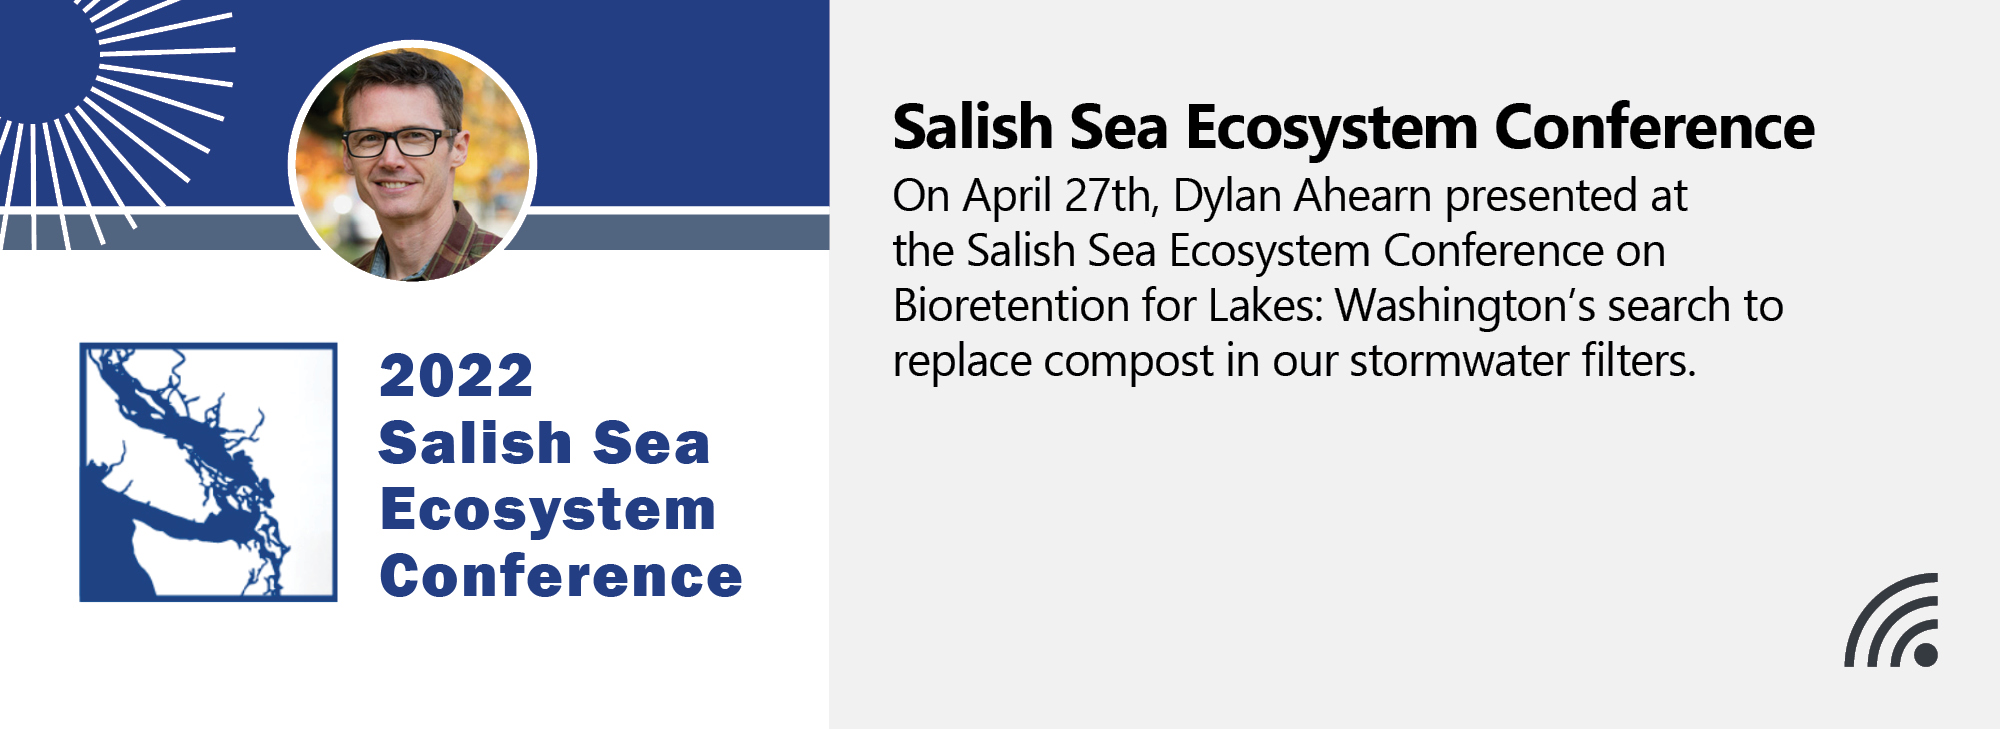 Q2-salish-sea-ecosystem-conference